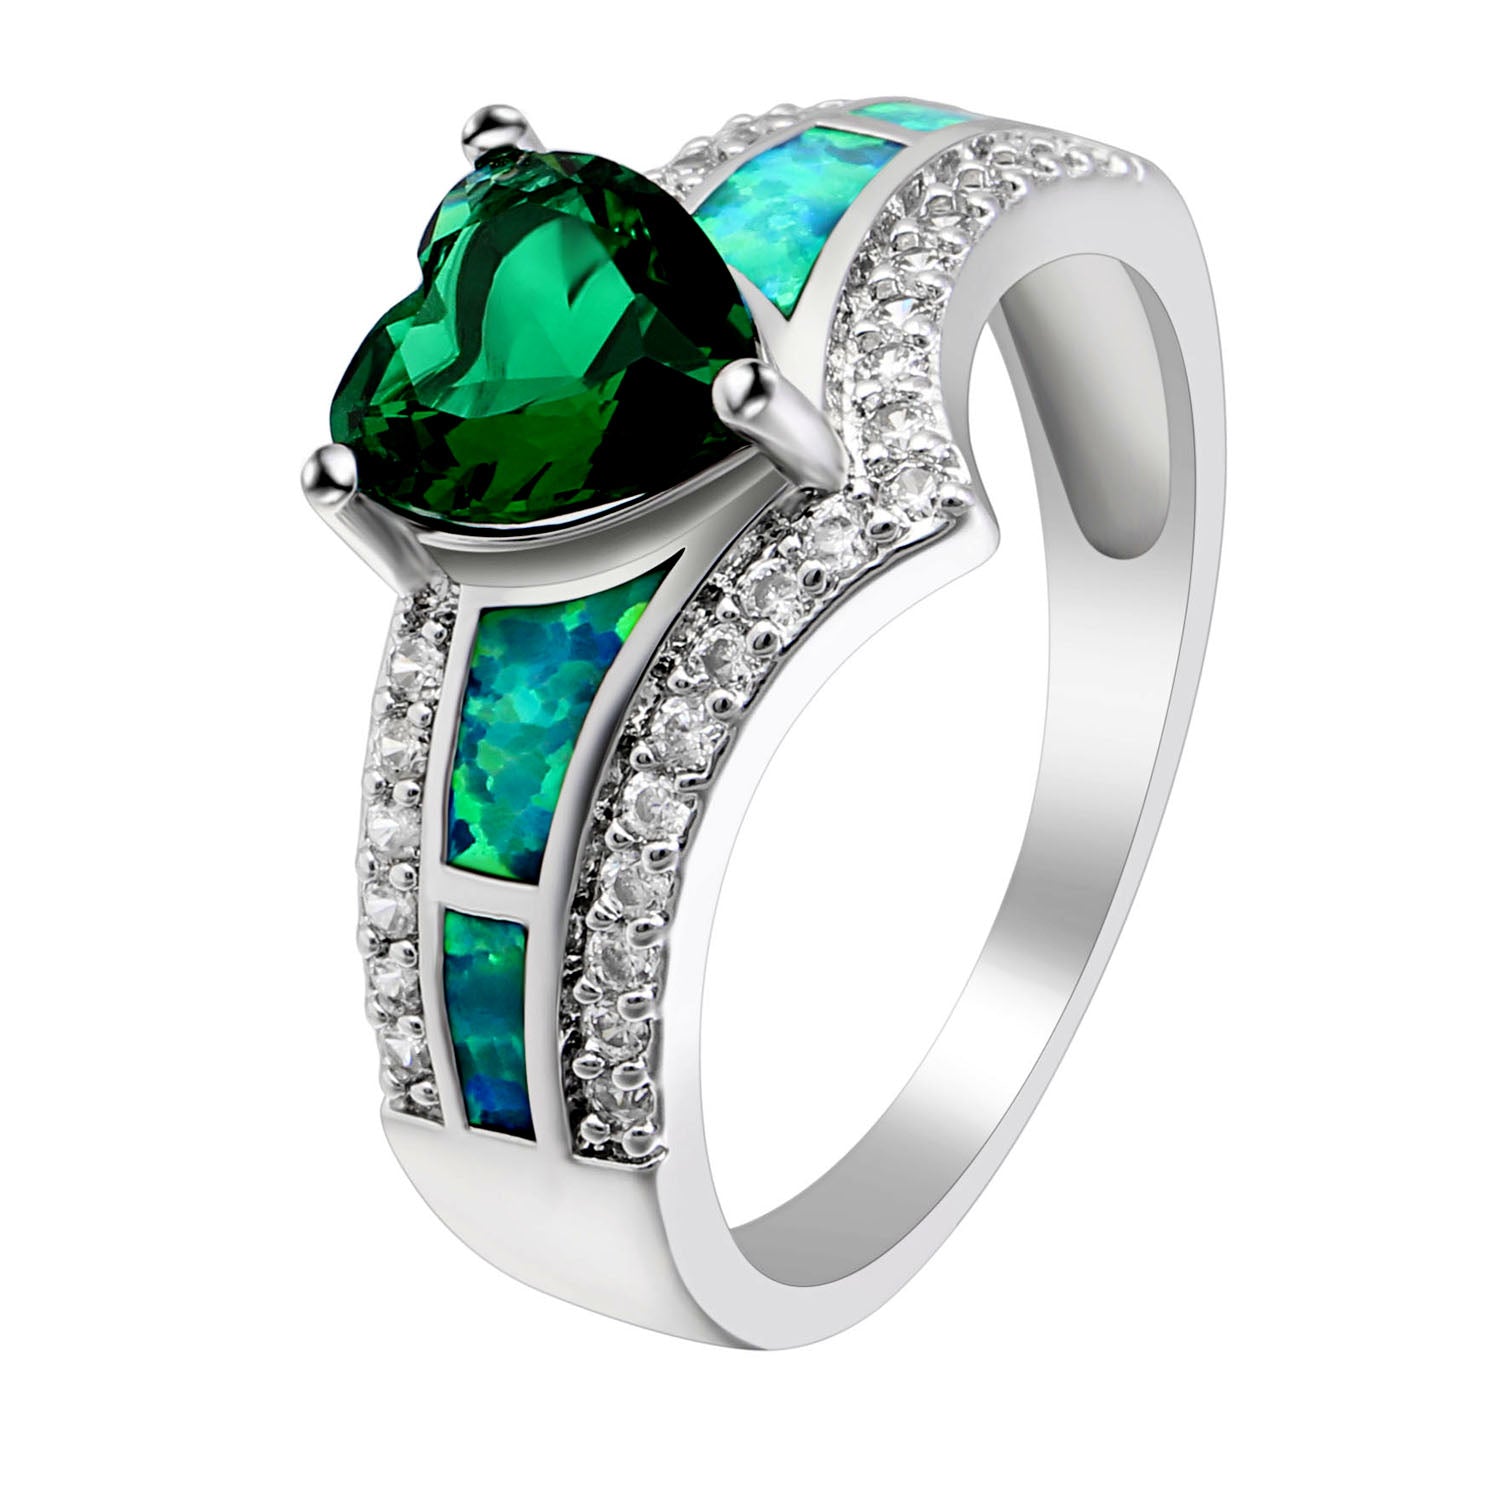 Majestic Heart Cz Promise Ring Created Fire Opal Girl Women Ginger Lyne - Green,9